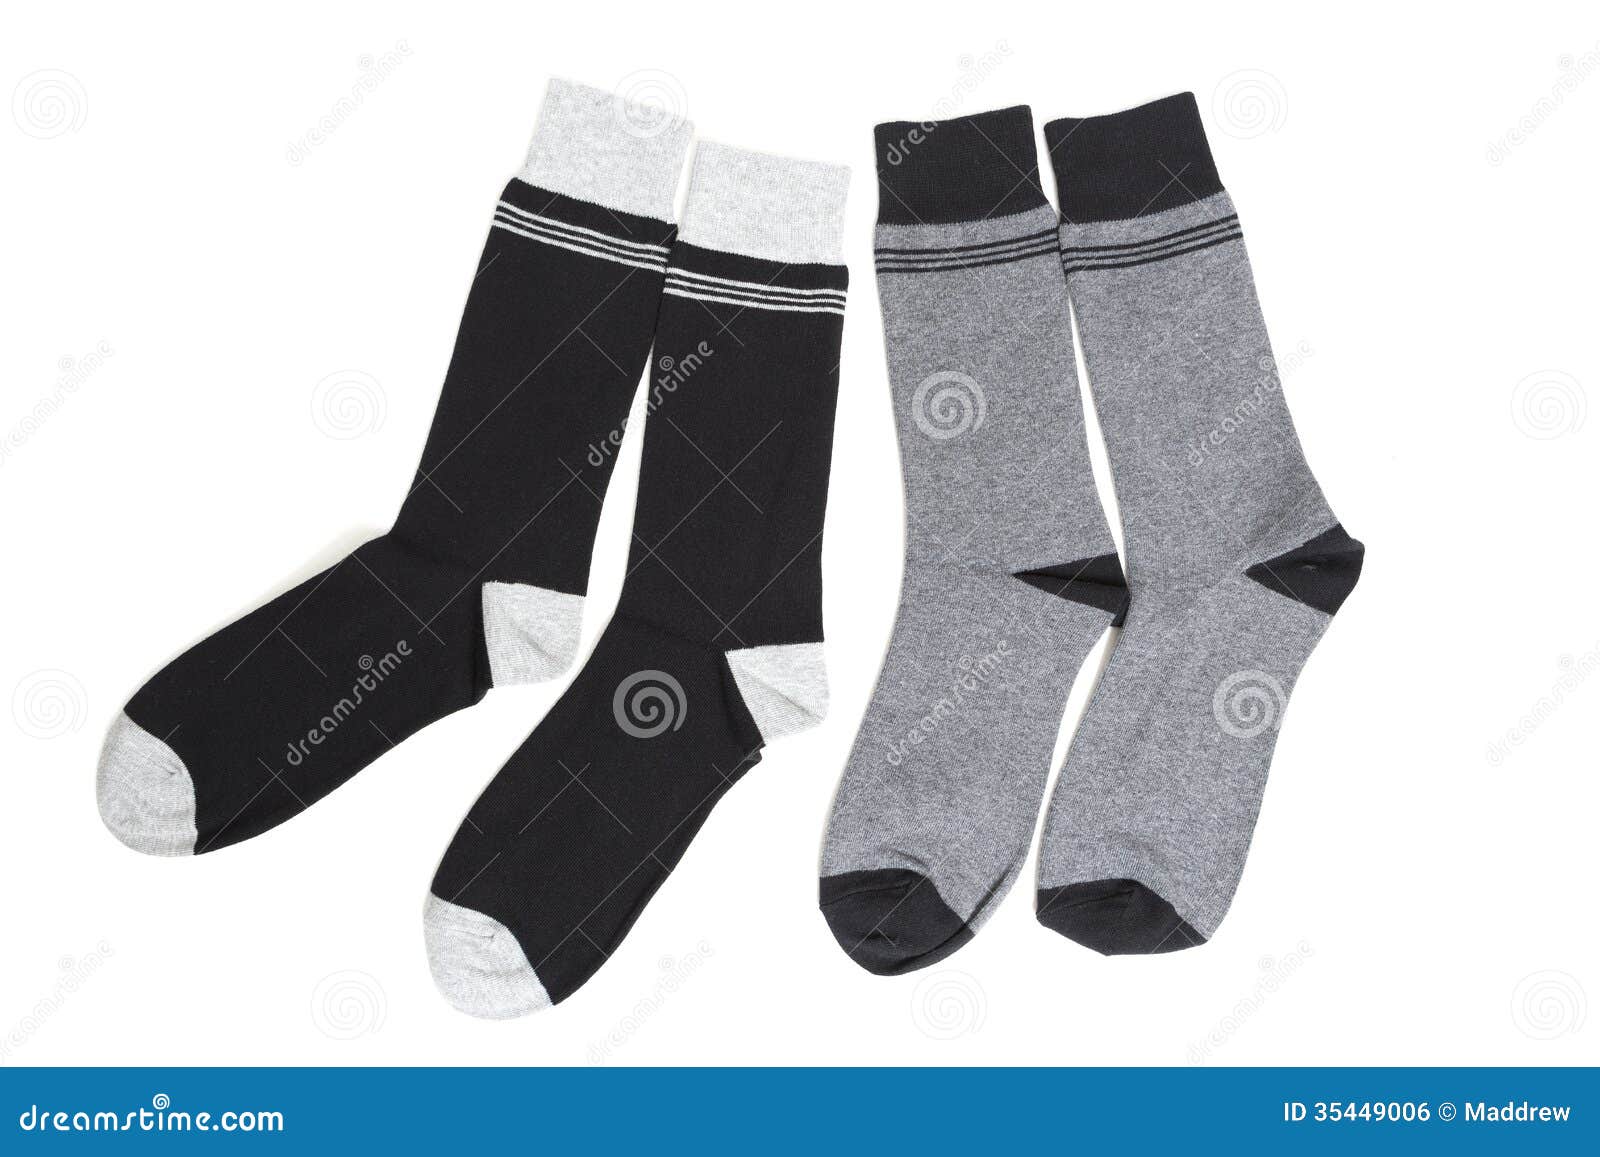 Socks stock photo. Image of socks, undecided, pairs, elastic - 35449006